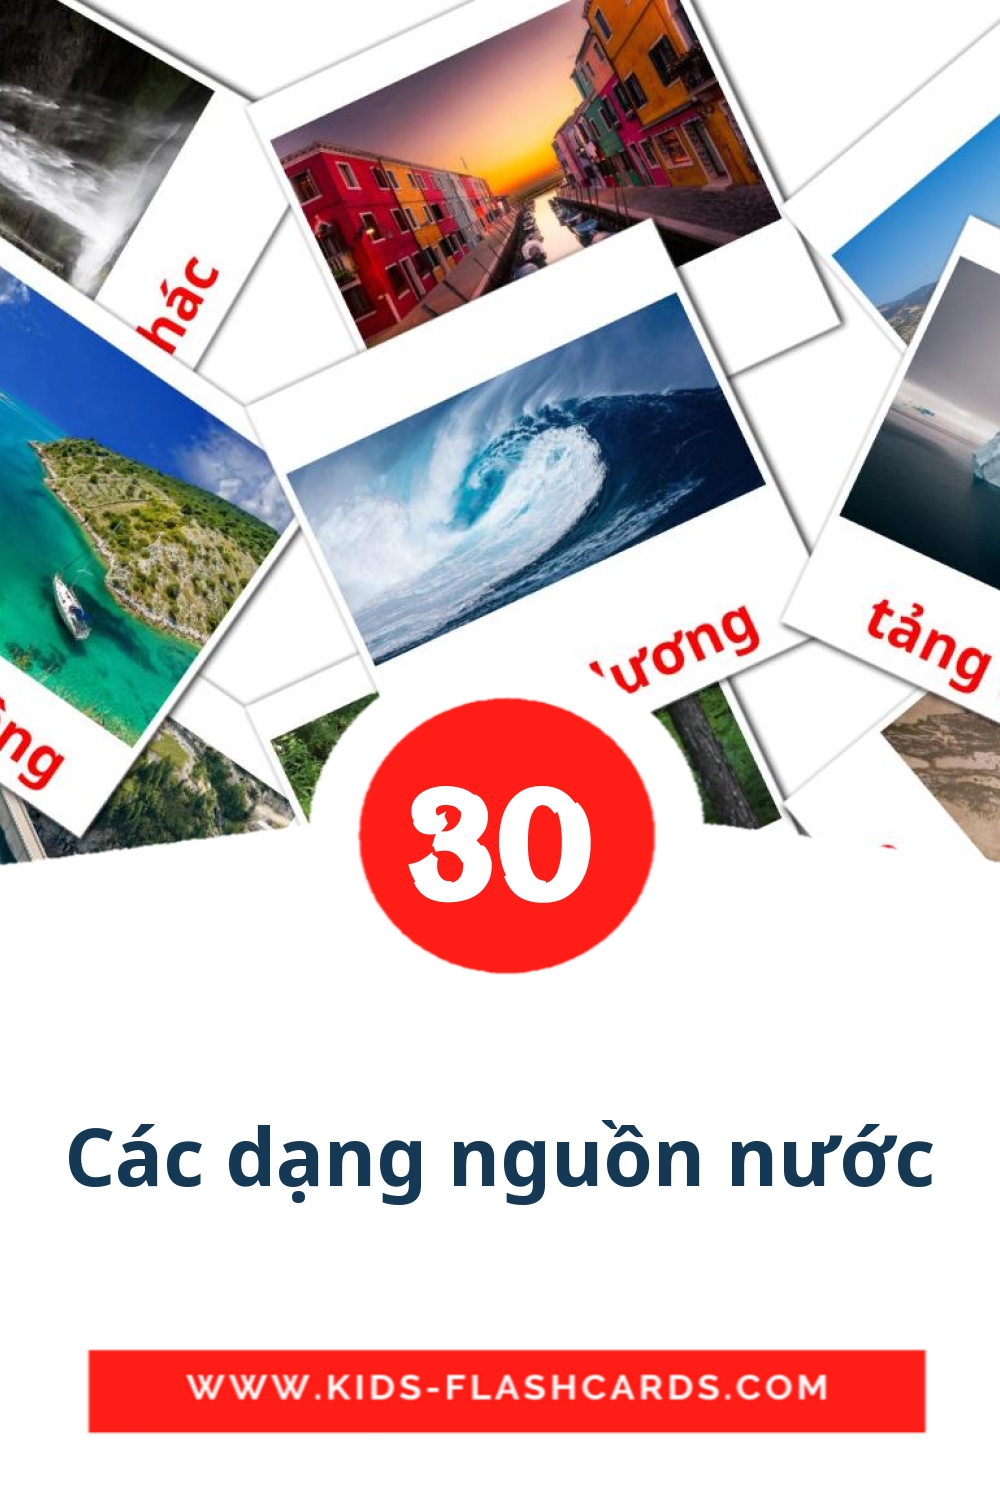 30 Các dạng nguồn nước Bildkarten für den Kindergarten auf Vietnamesisch